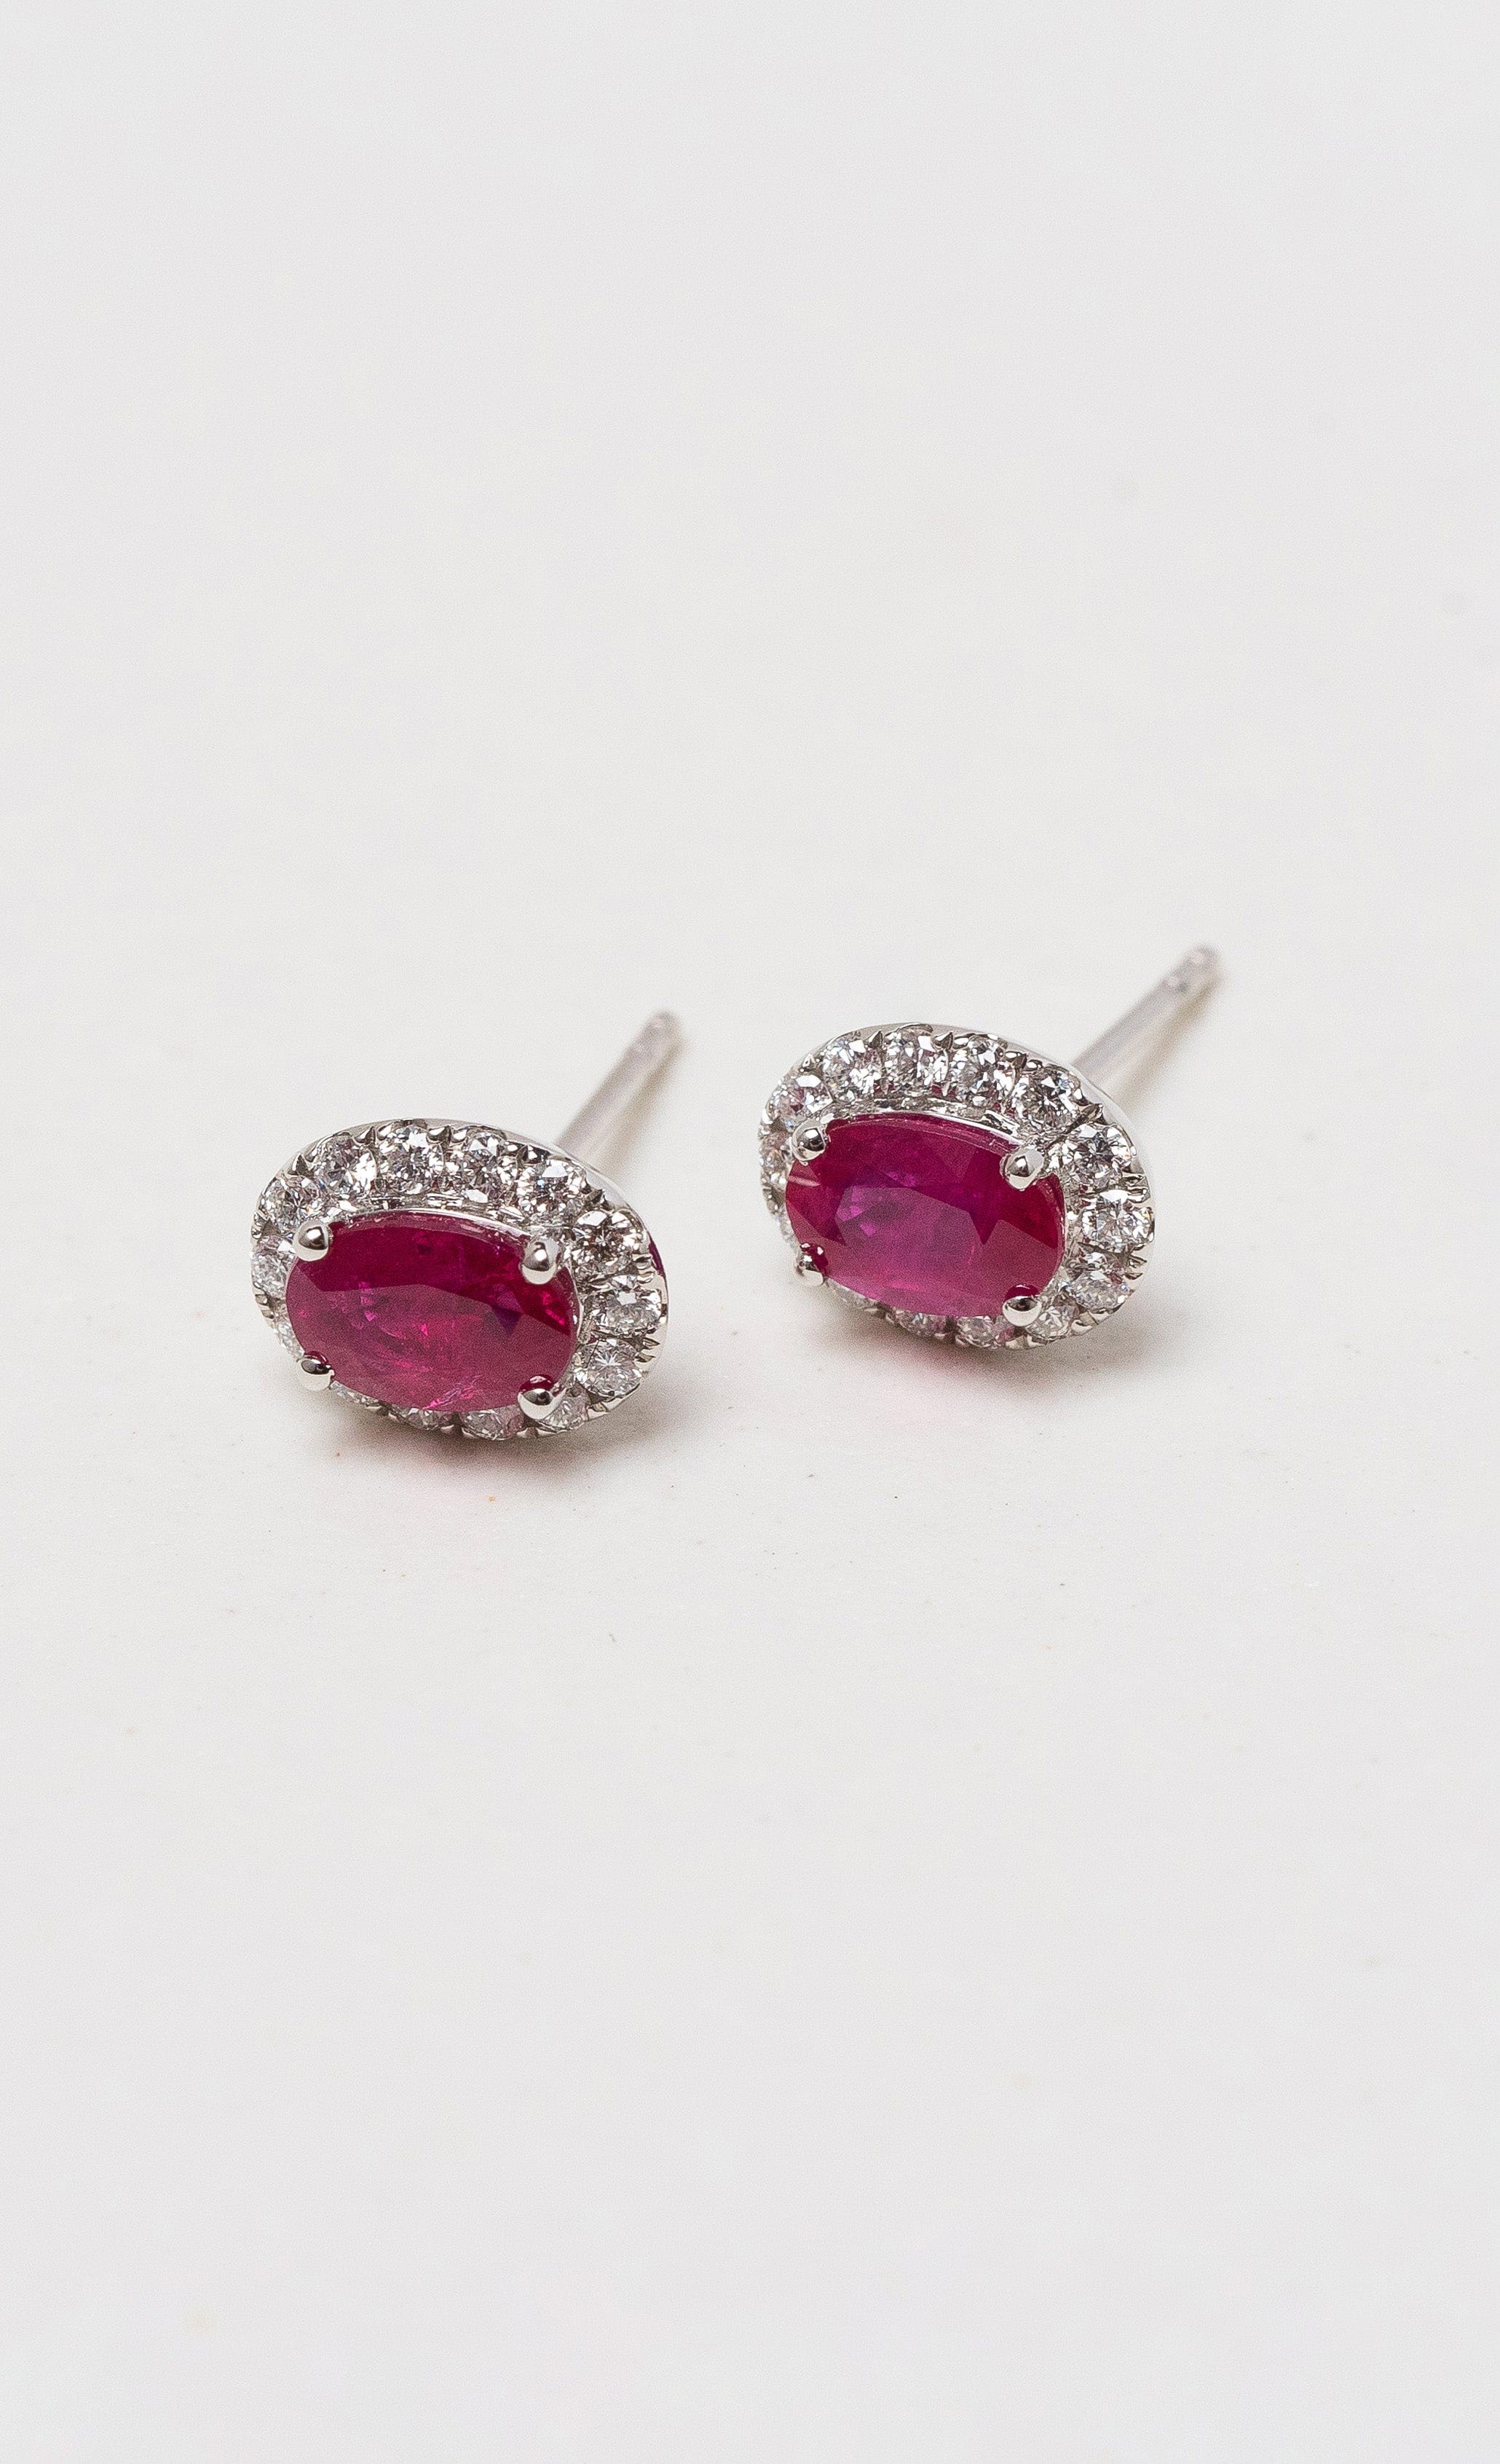 Hogans Family Jewellers 18K WG Oval Ruby Cluster Stud Earrings